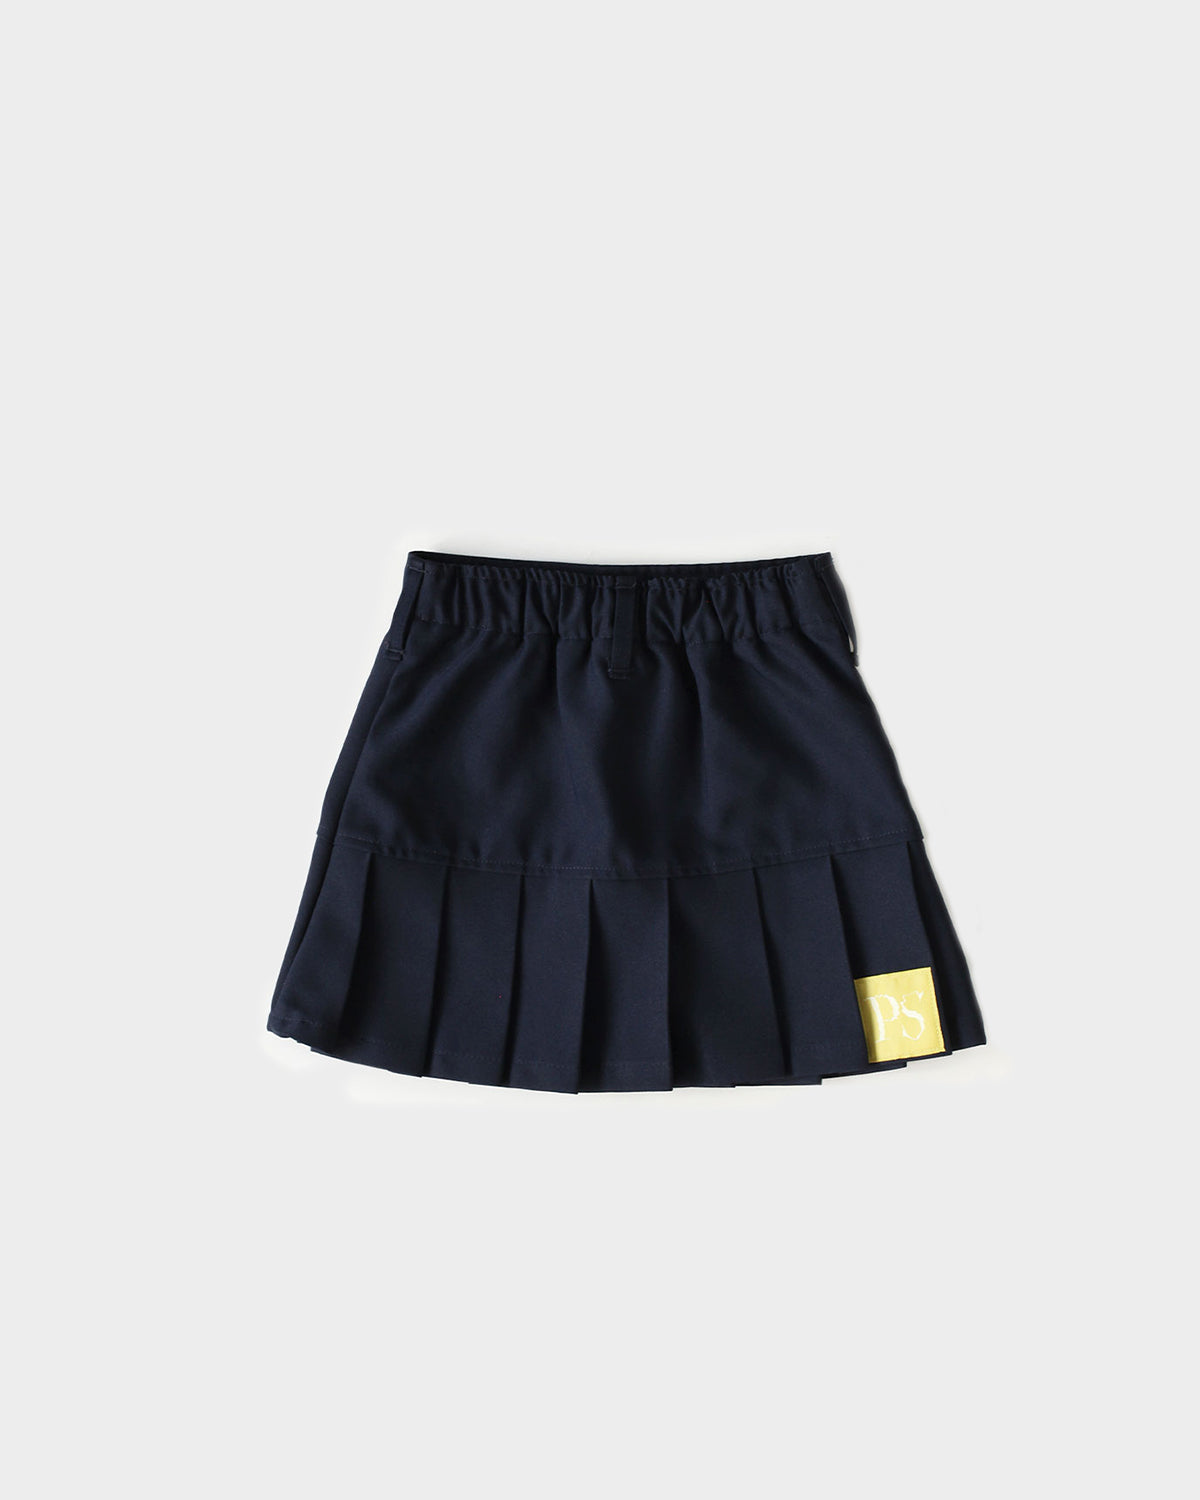 Vintage School Skirt